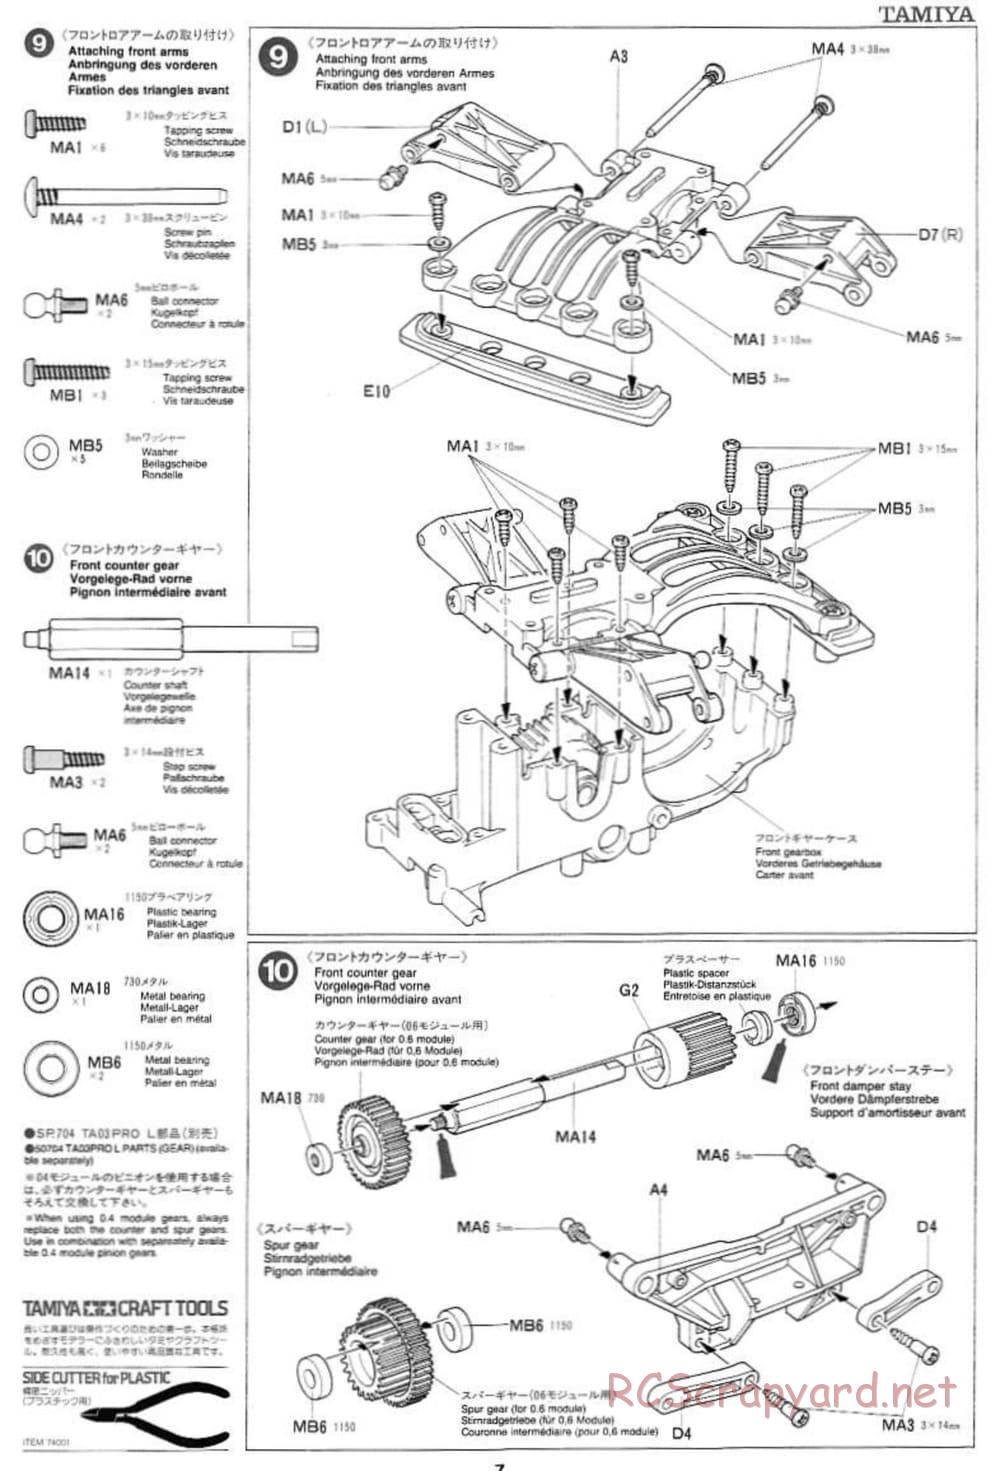 Tamiya - Toyota Corolla WRC - TA-03FS Chassis - Manual - Page 7